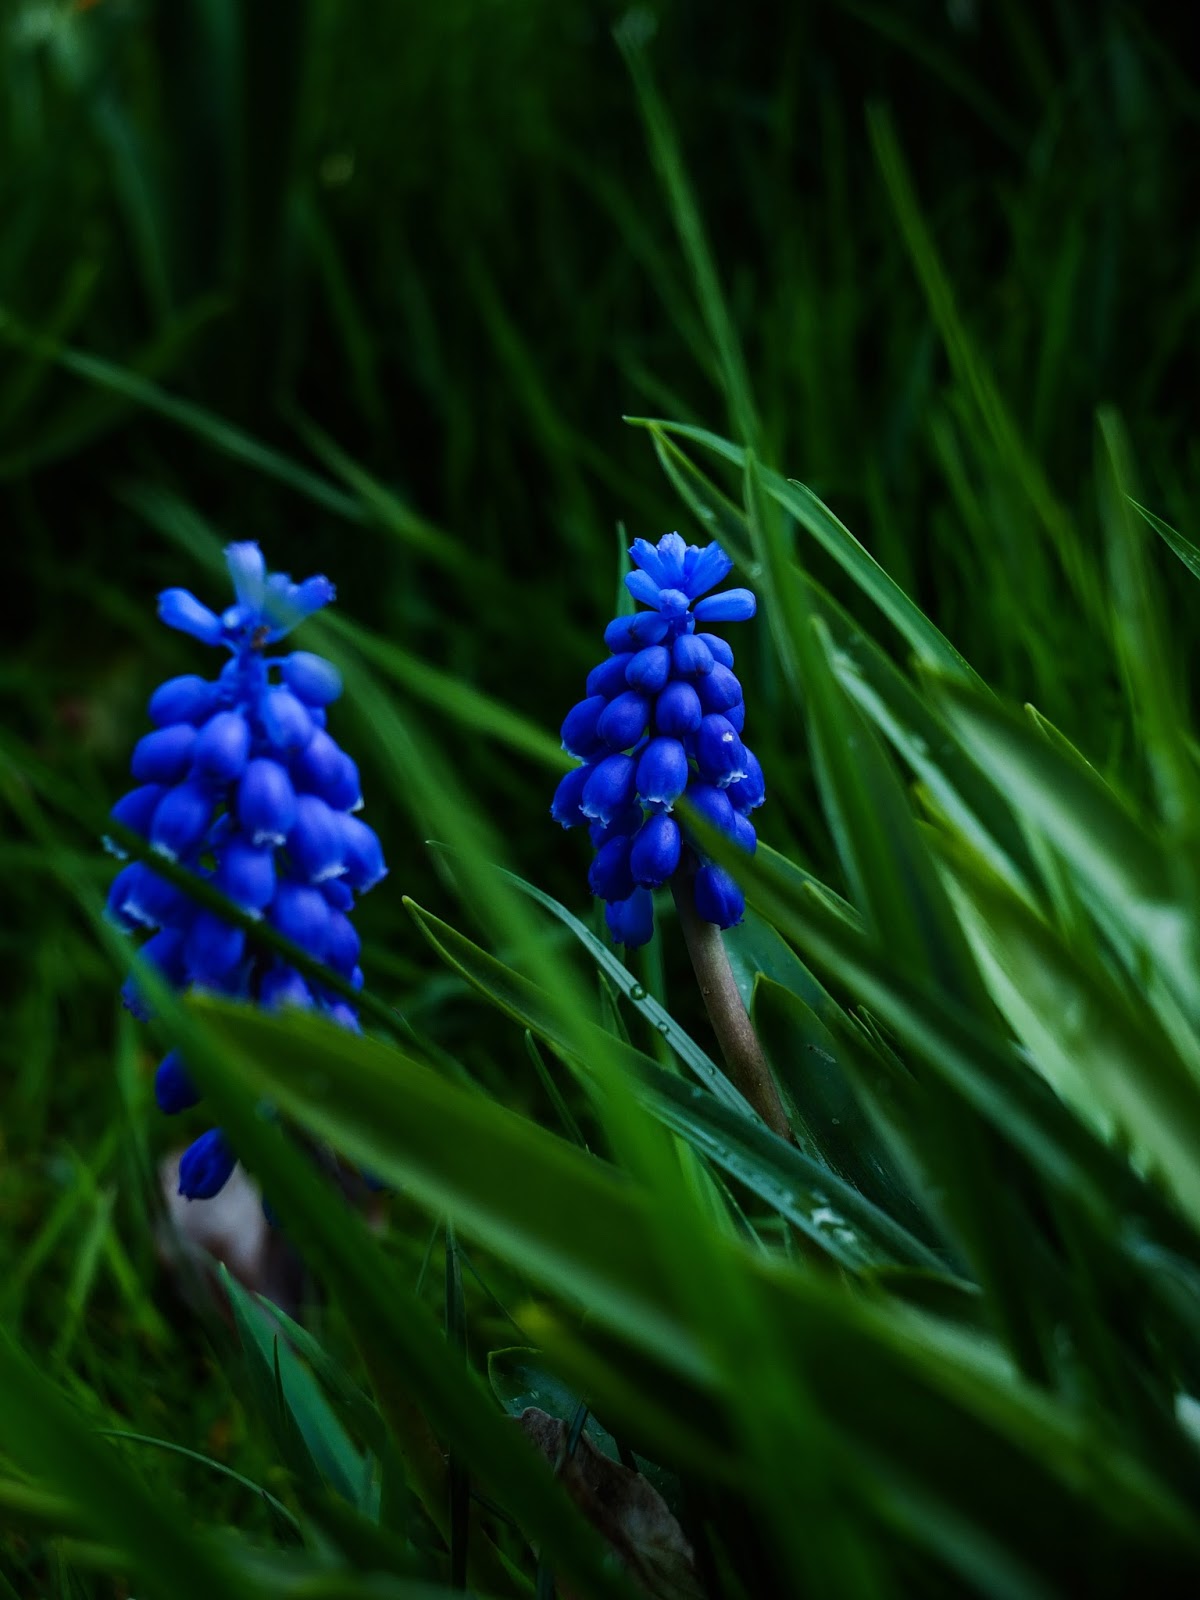 Dark blue muscari - Grape Hyacinths flowering in the grass.